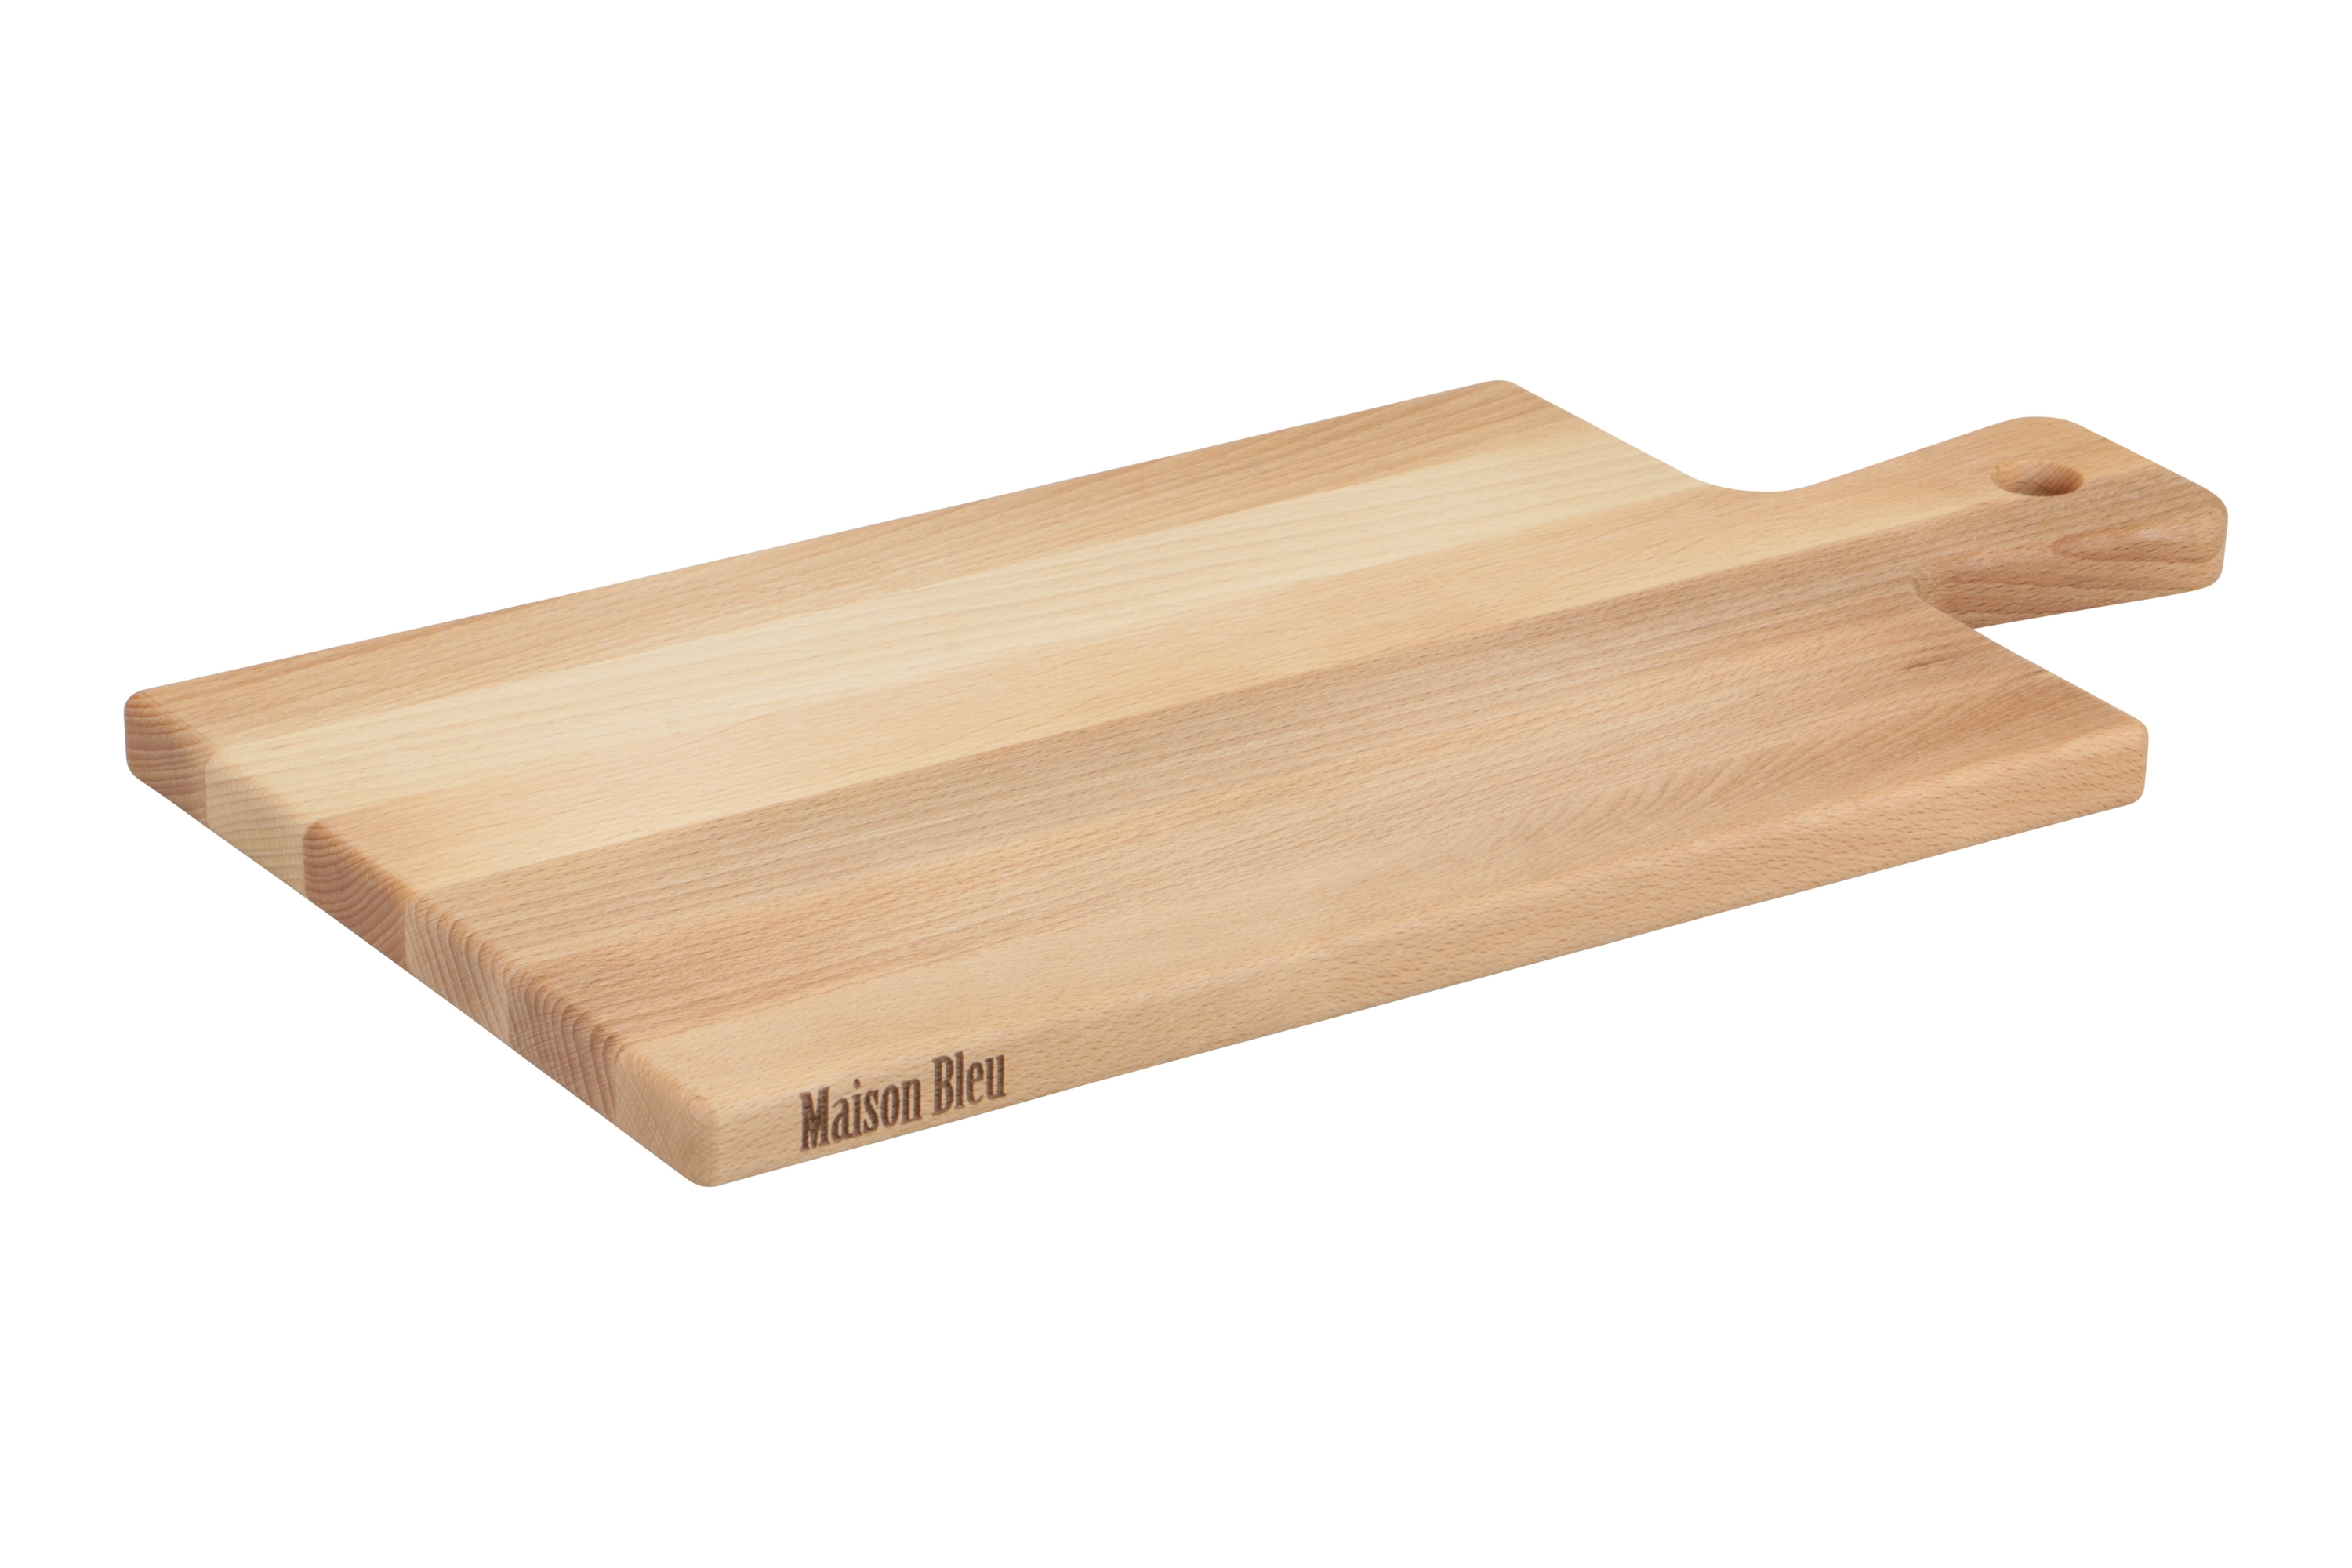 Picture of Beuken plank 38x19,5x1,5 cm 